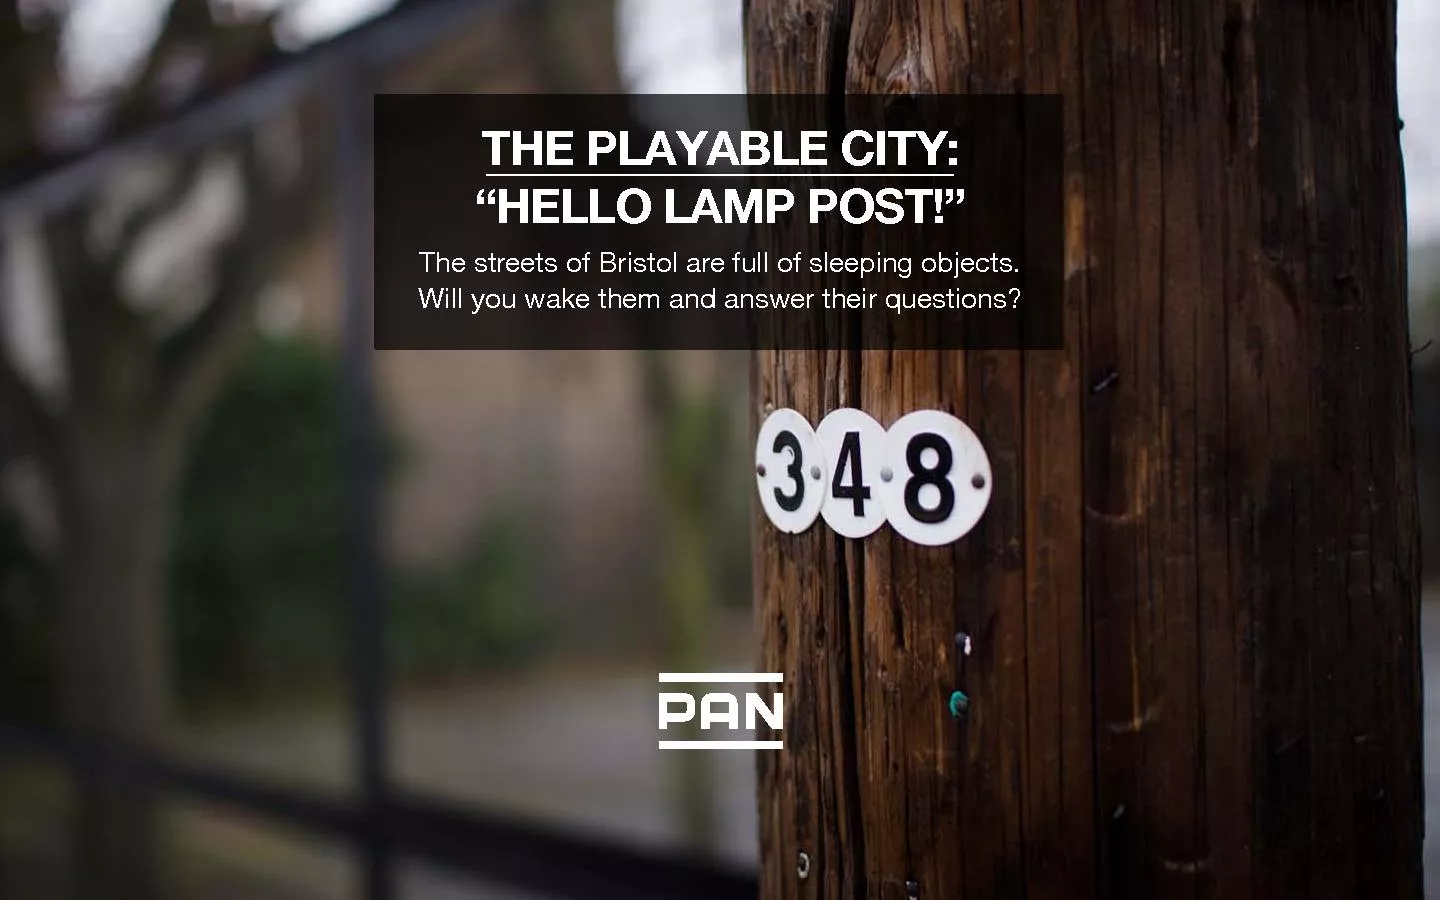 THE PLAYABLE CITY:“HELLO LAMP POST!”